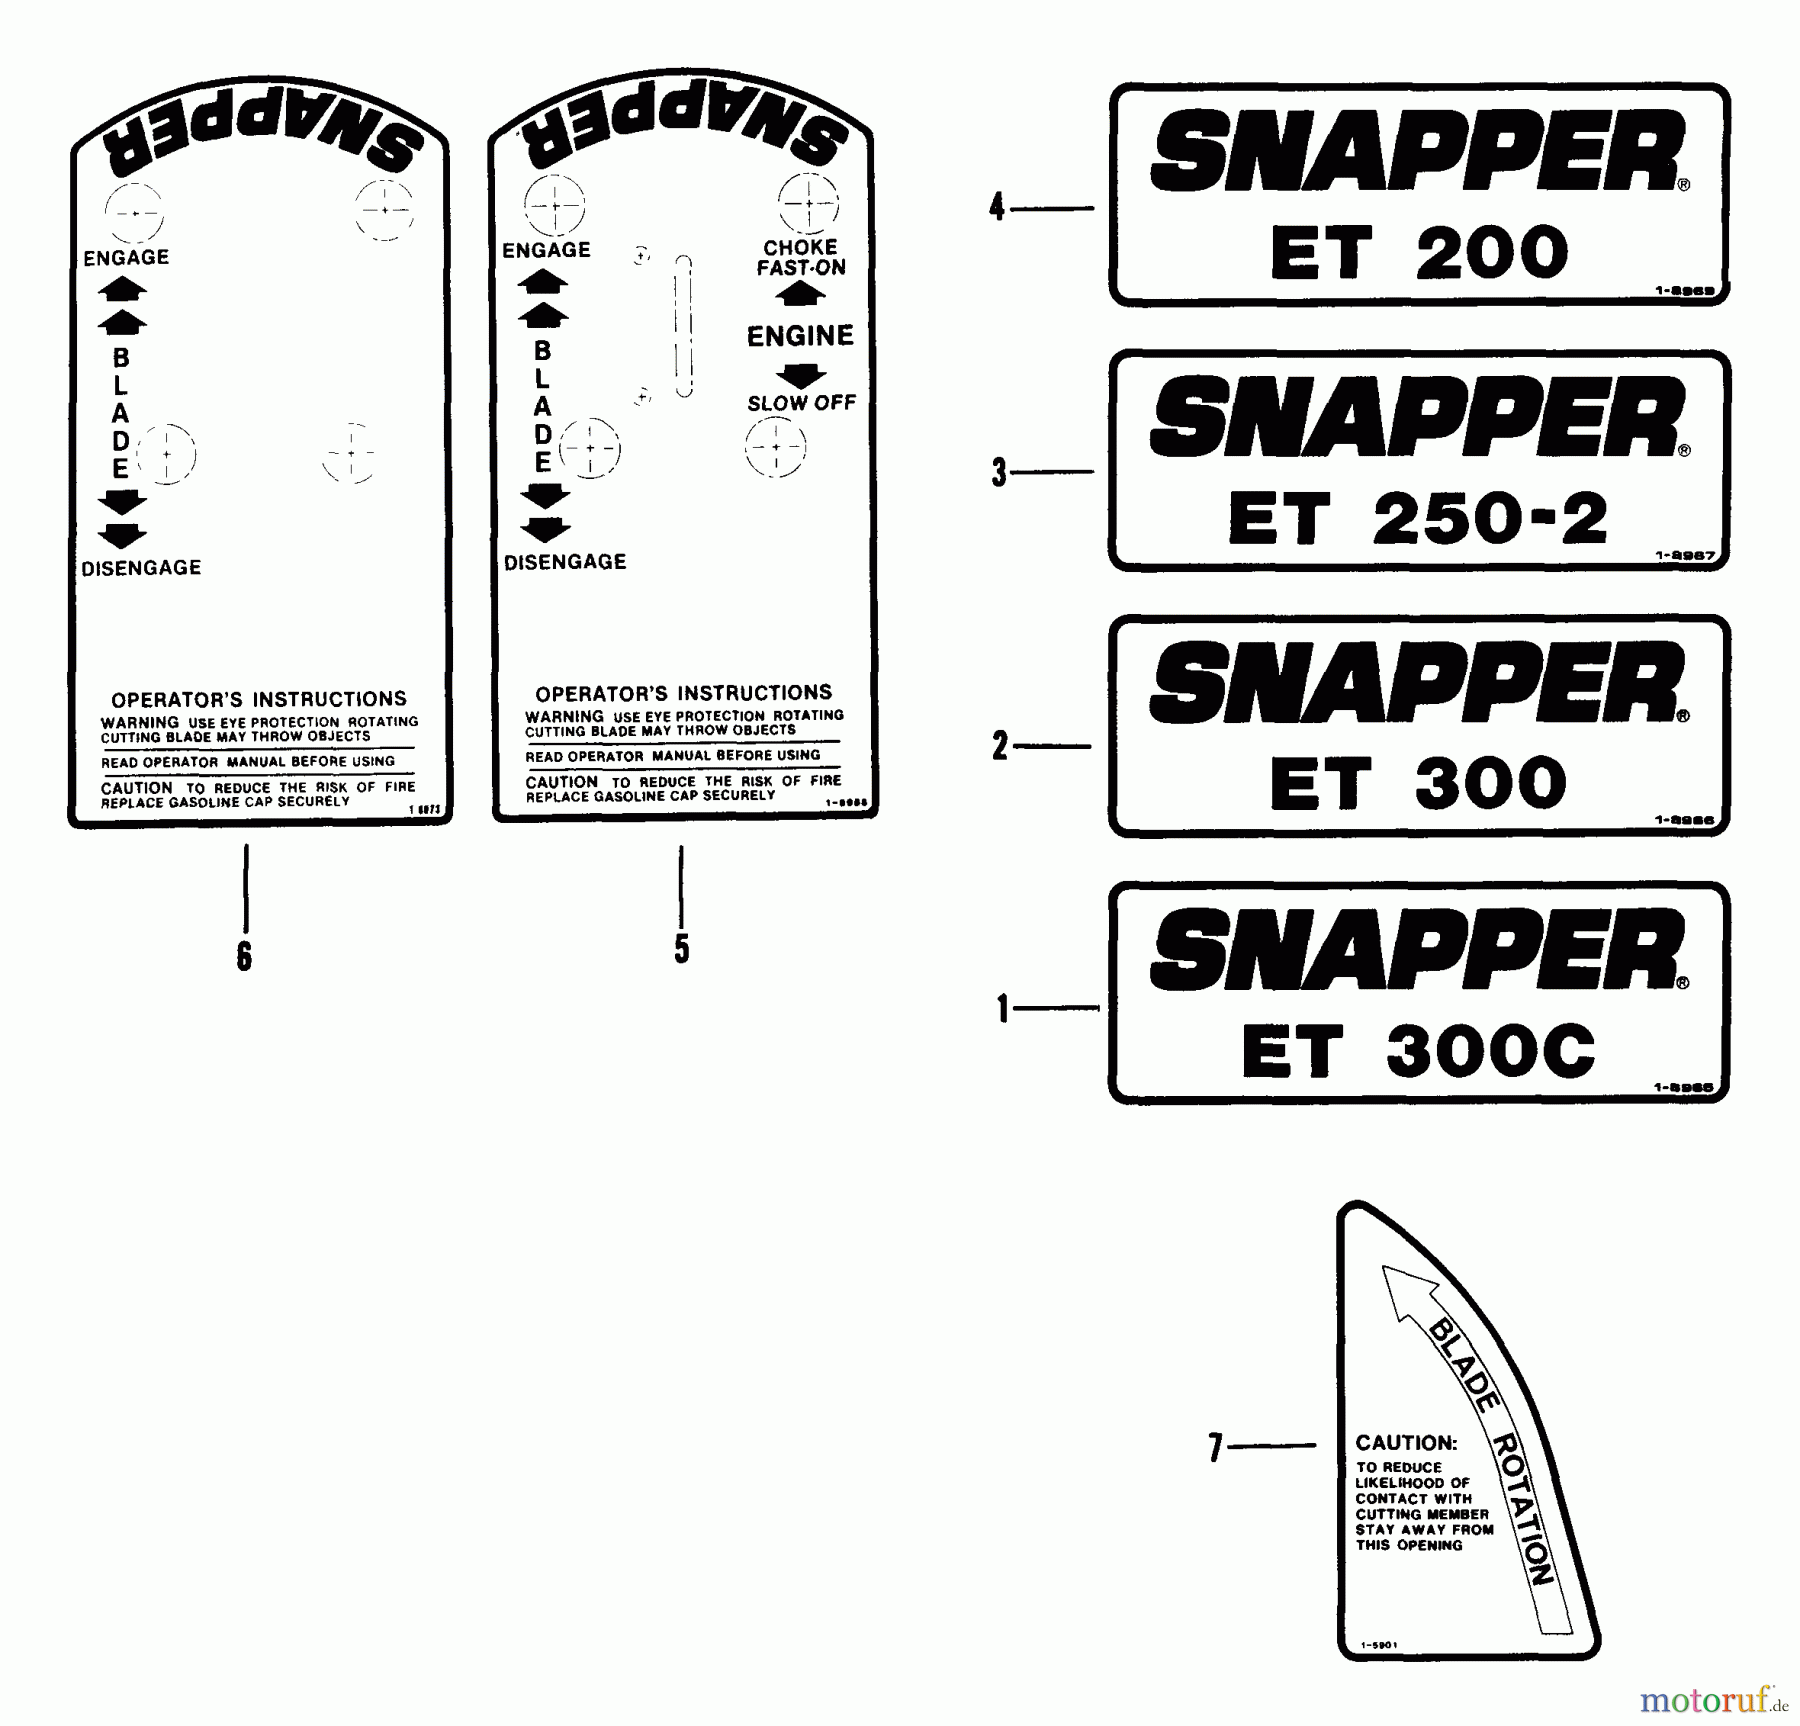  Snapper Kantenschneider ET301B - Snapper Commercial Edger Trimmer, 3 HP, Series 1 Decals